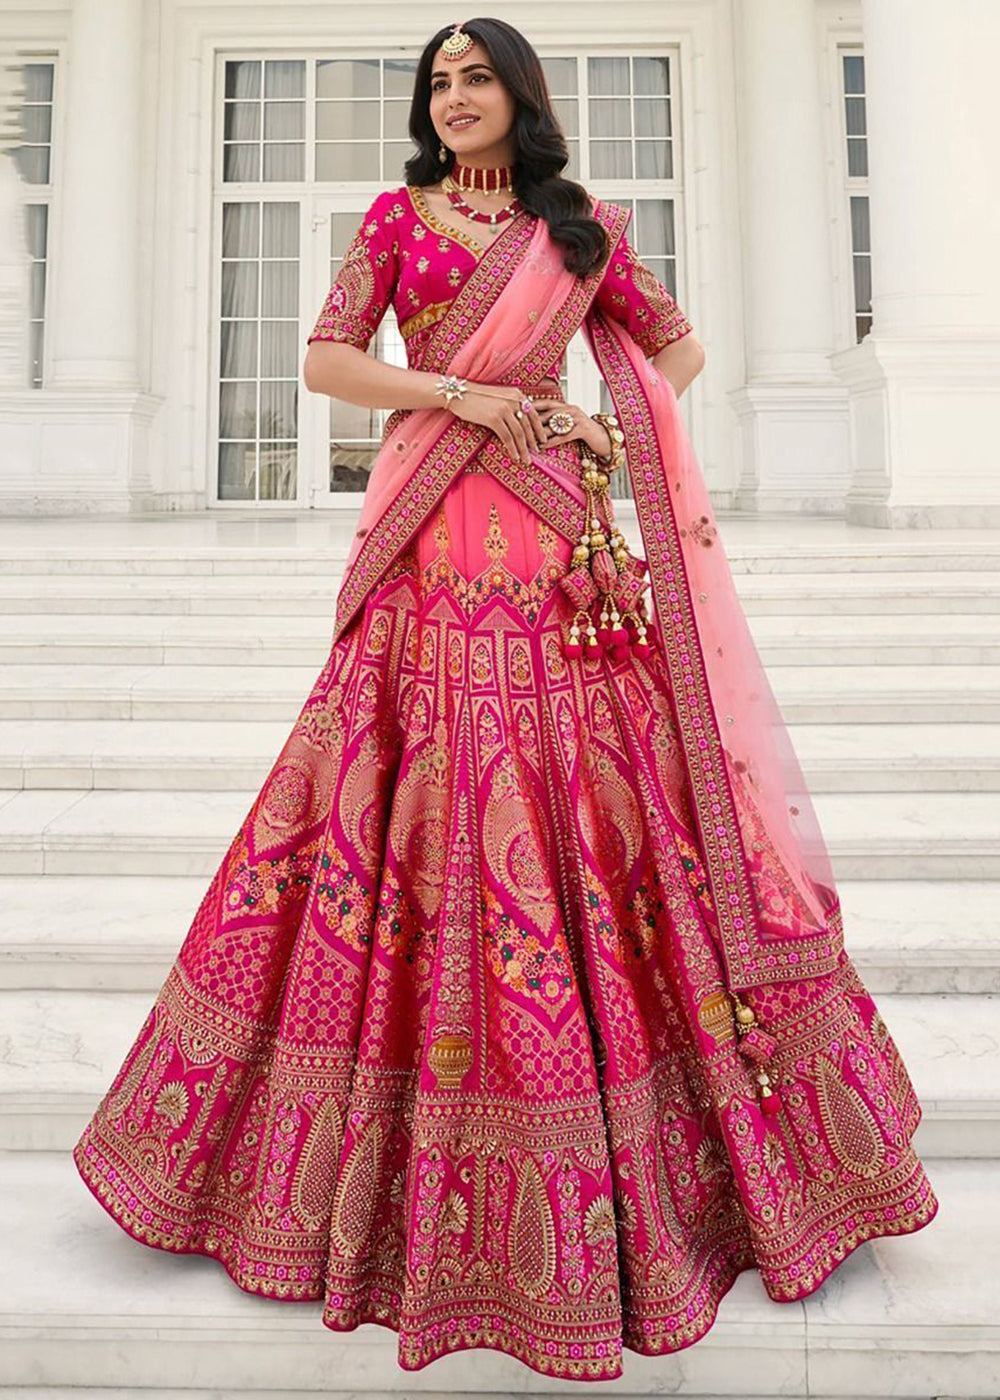 Buy Now Elegant Fuchsia Pink Heavy Embroidered Silk Bridal Lehenga Choli Online in USA, UK, Canada & Worldwide at Empress Clothing. 